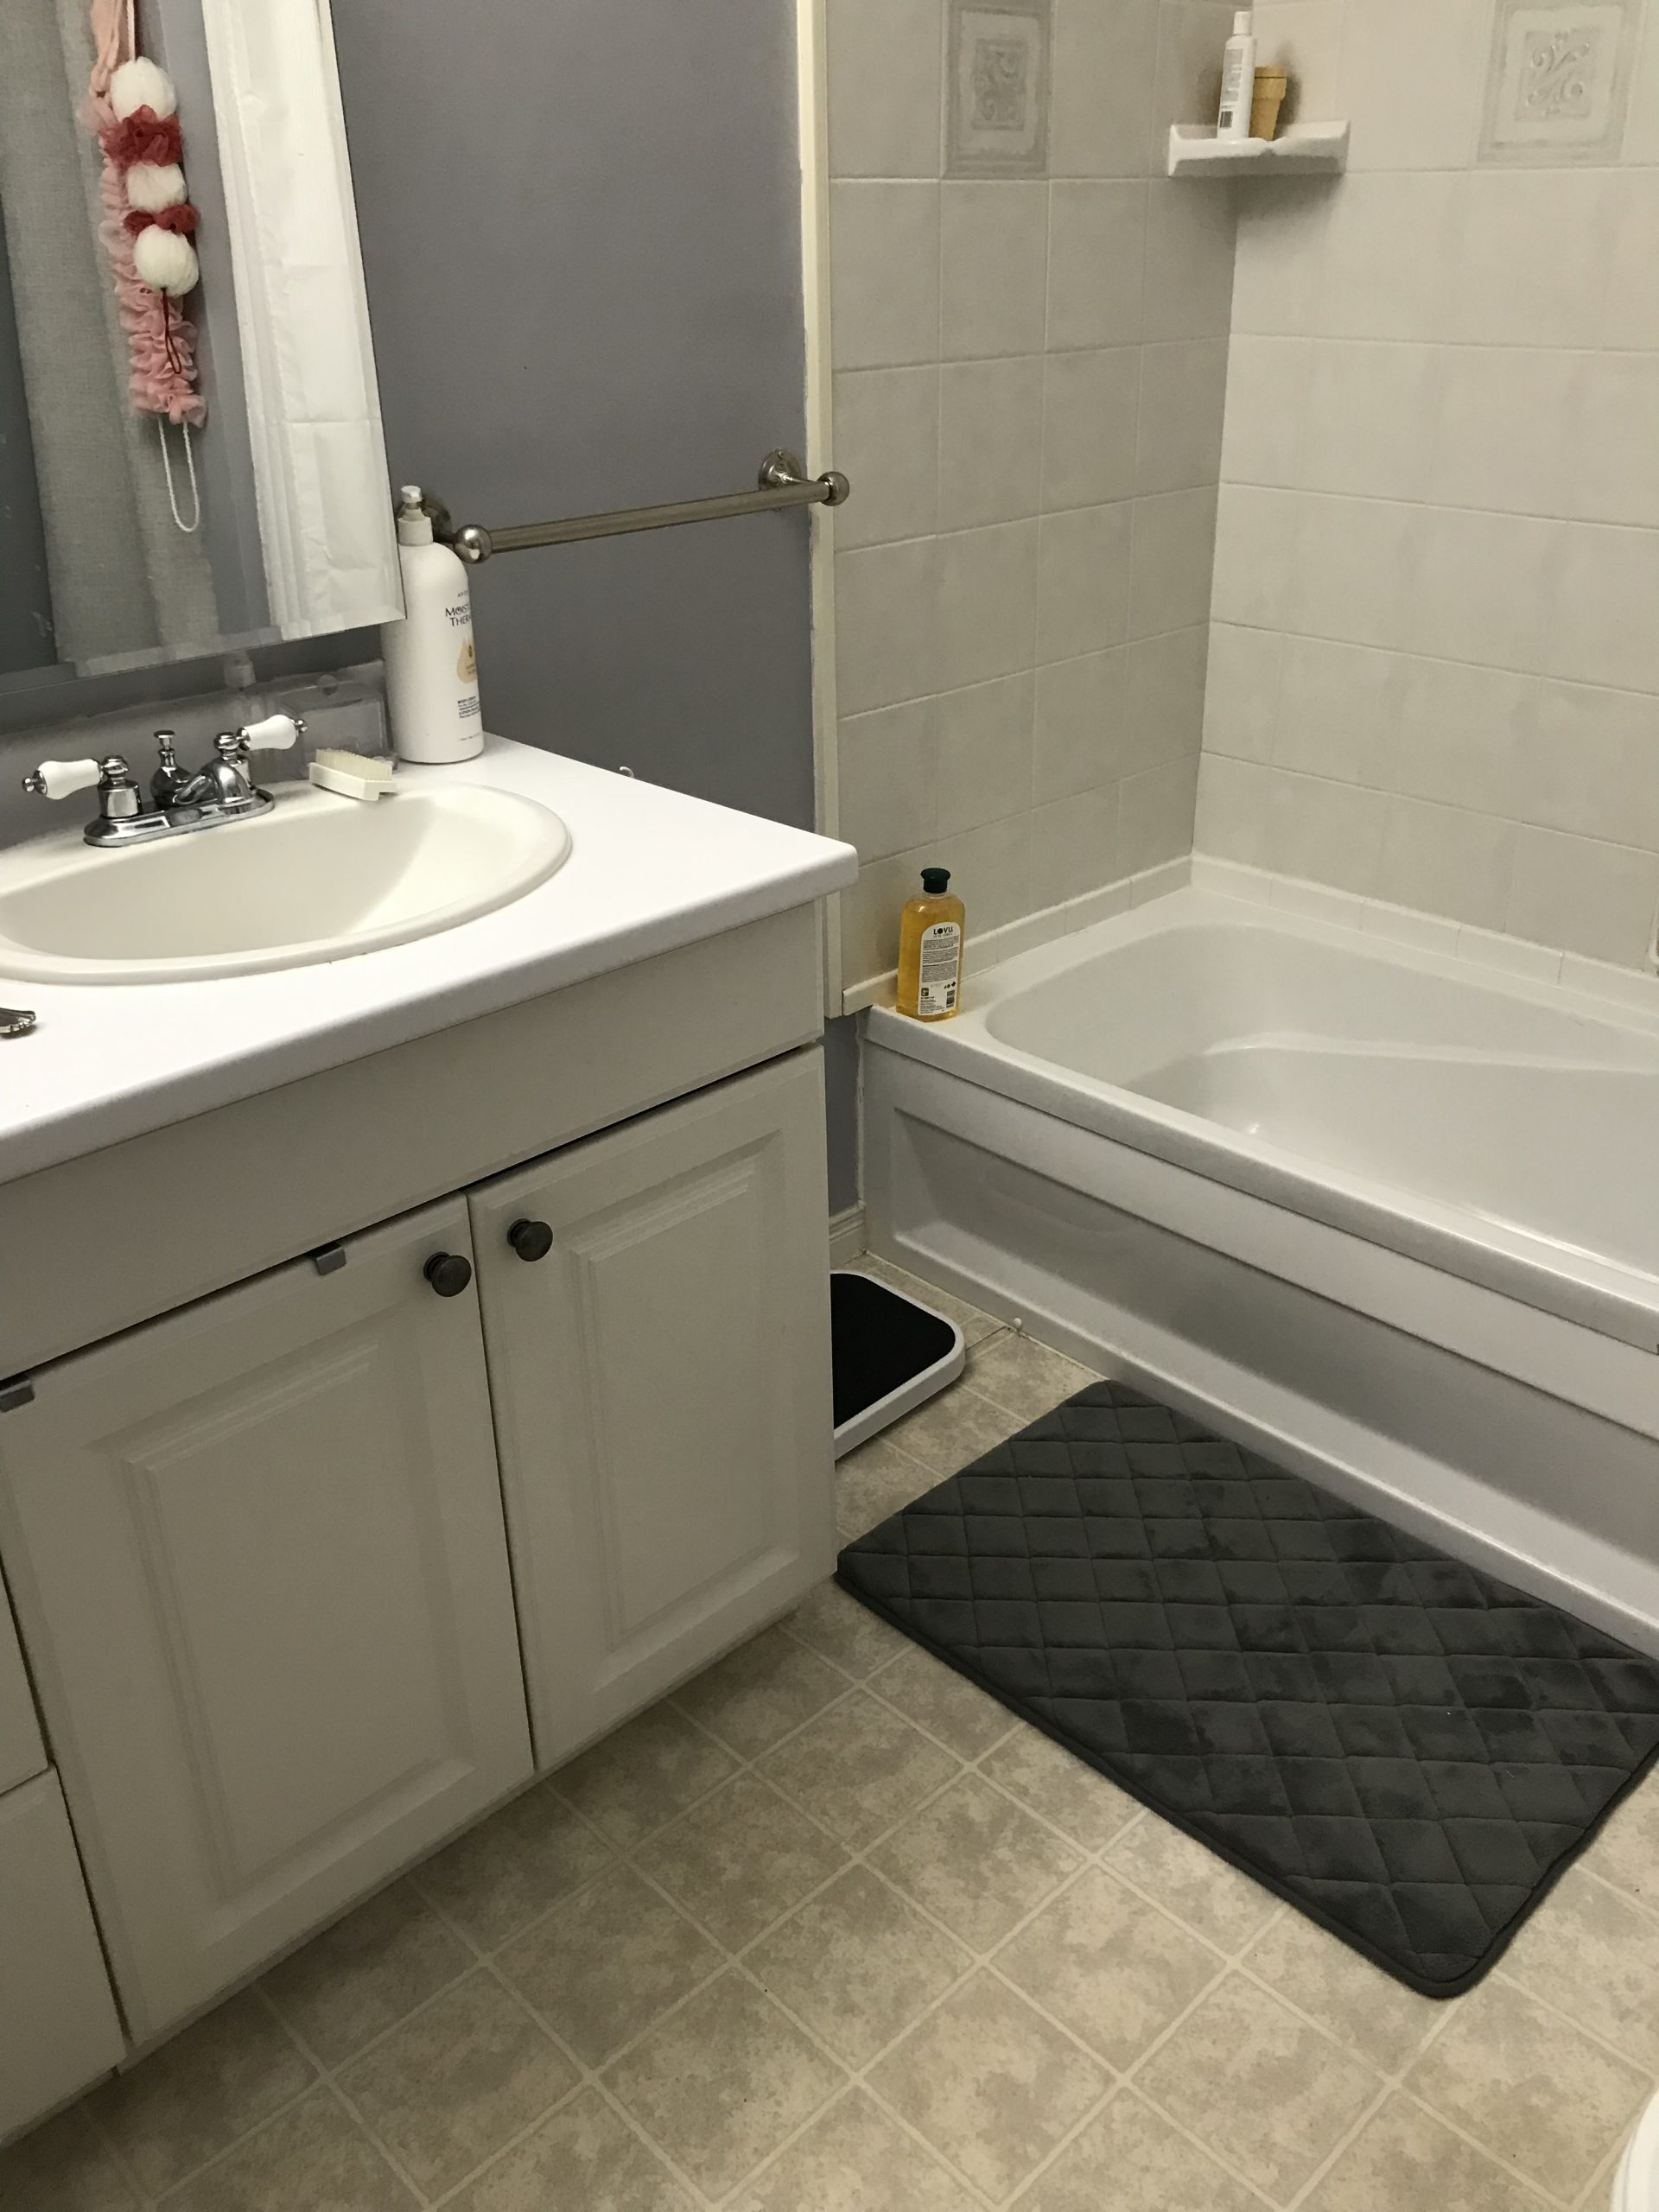 photo of bathtub and bathroom sink